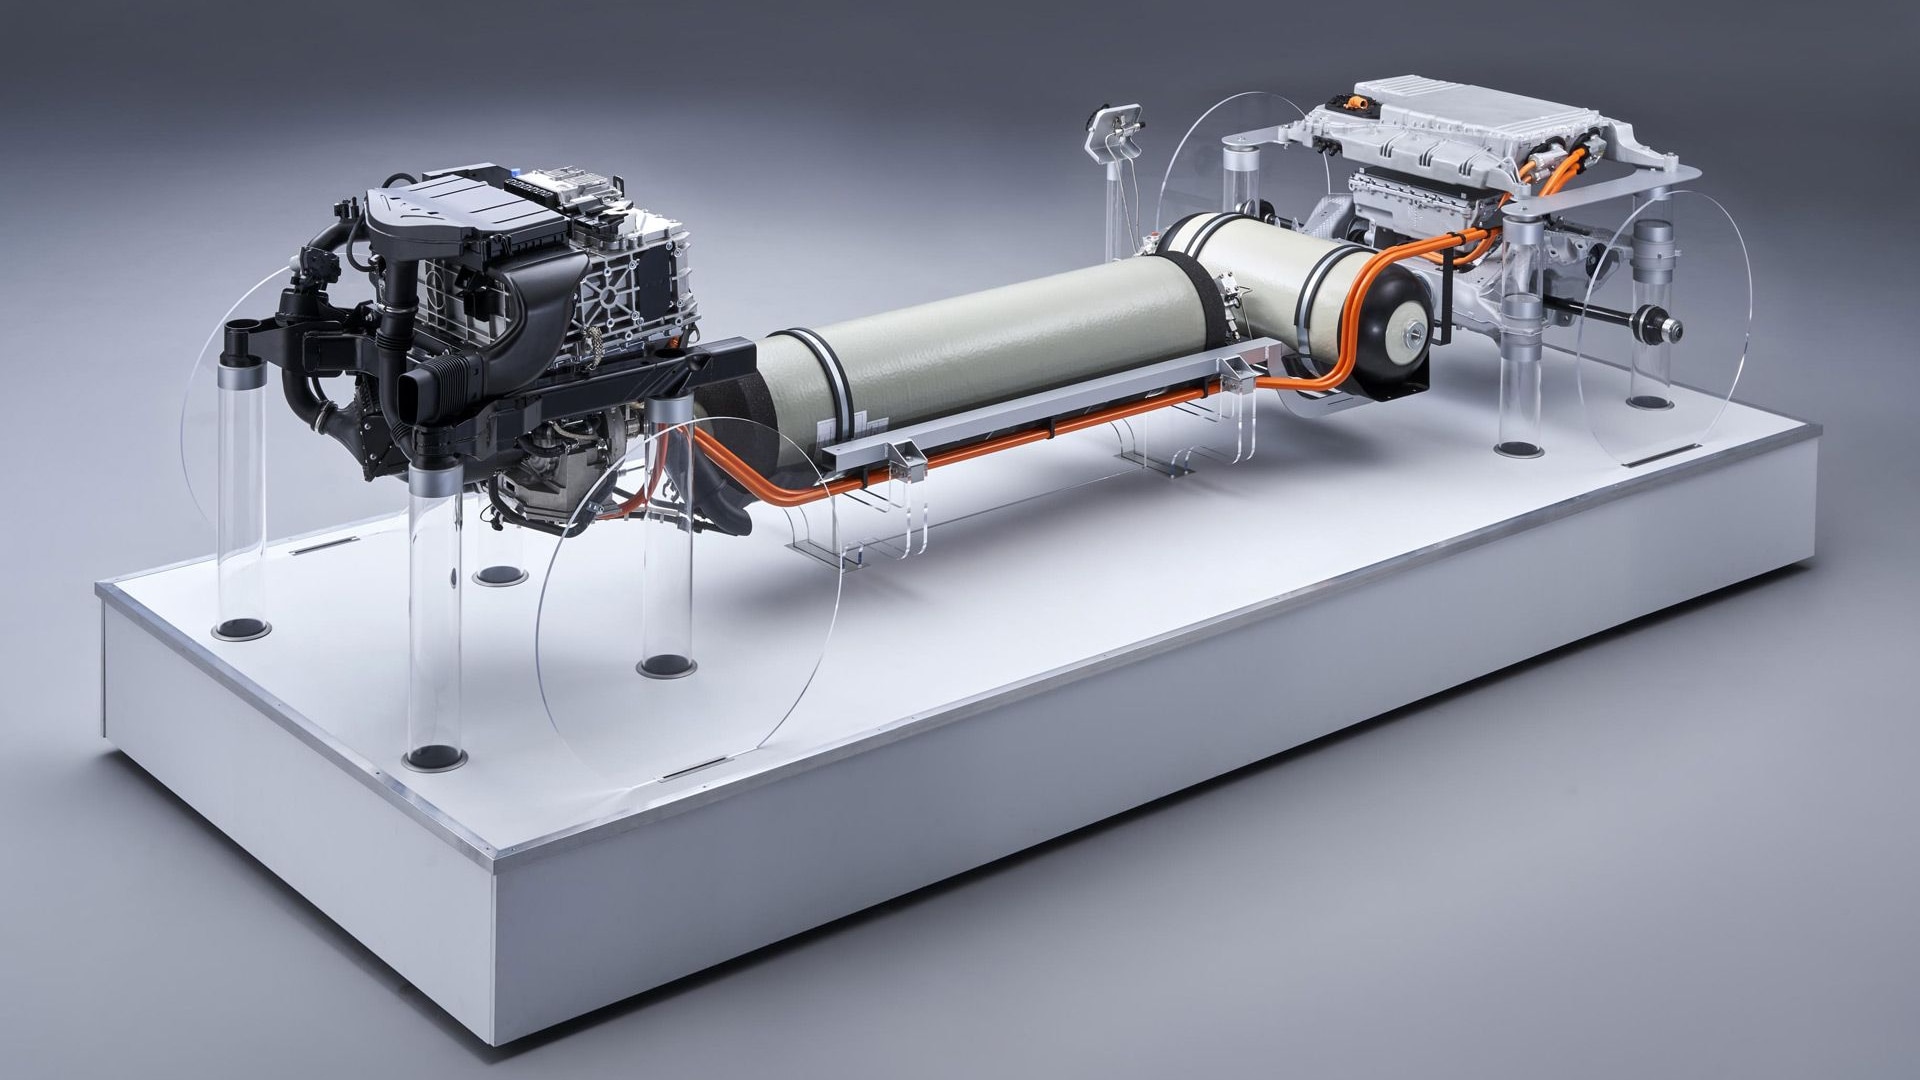 BMW hydrogen-electric powertrain entering production in 2022